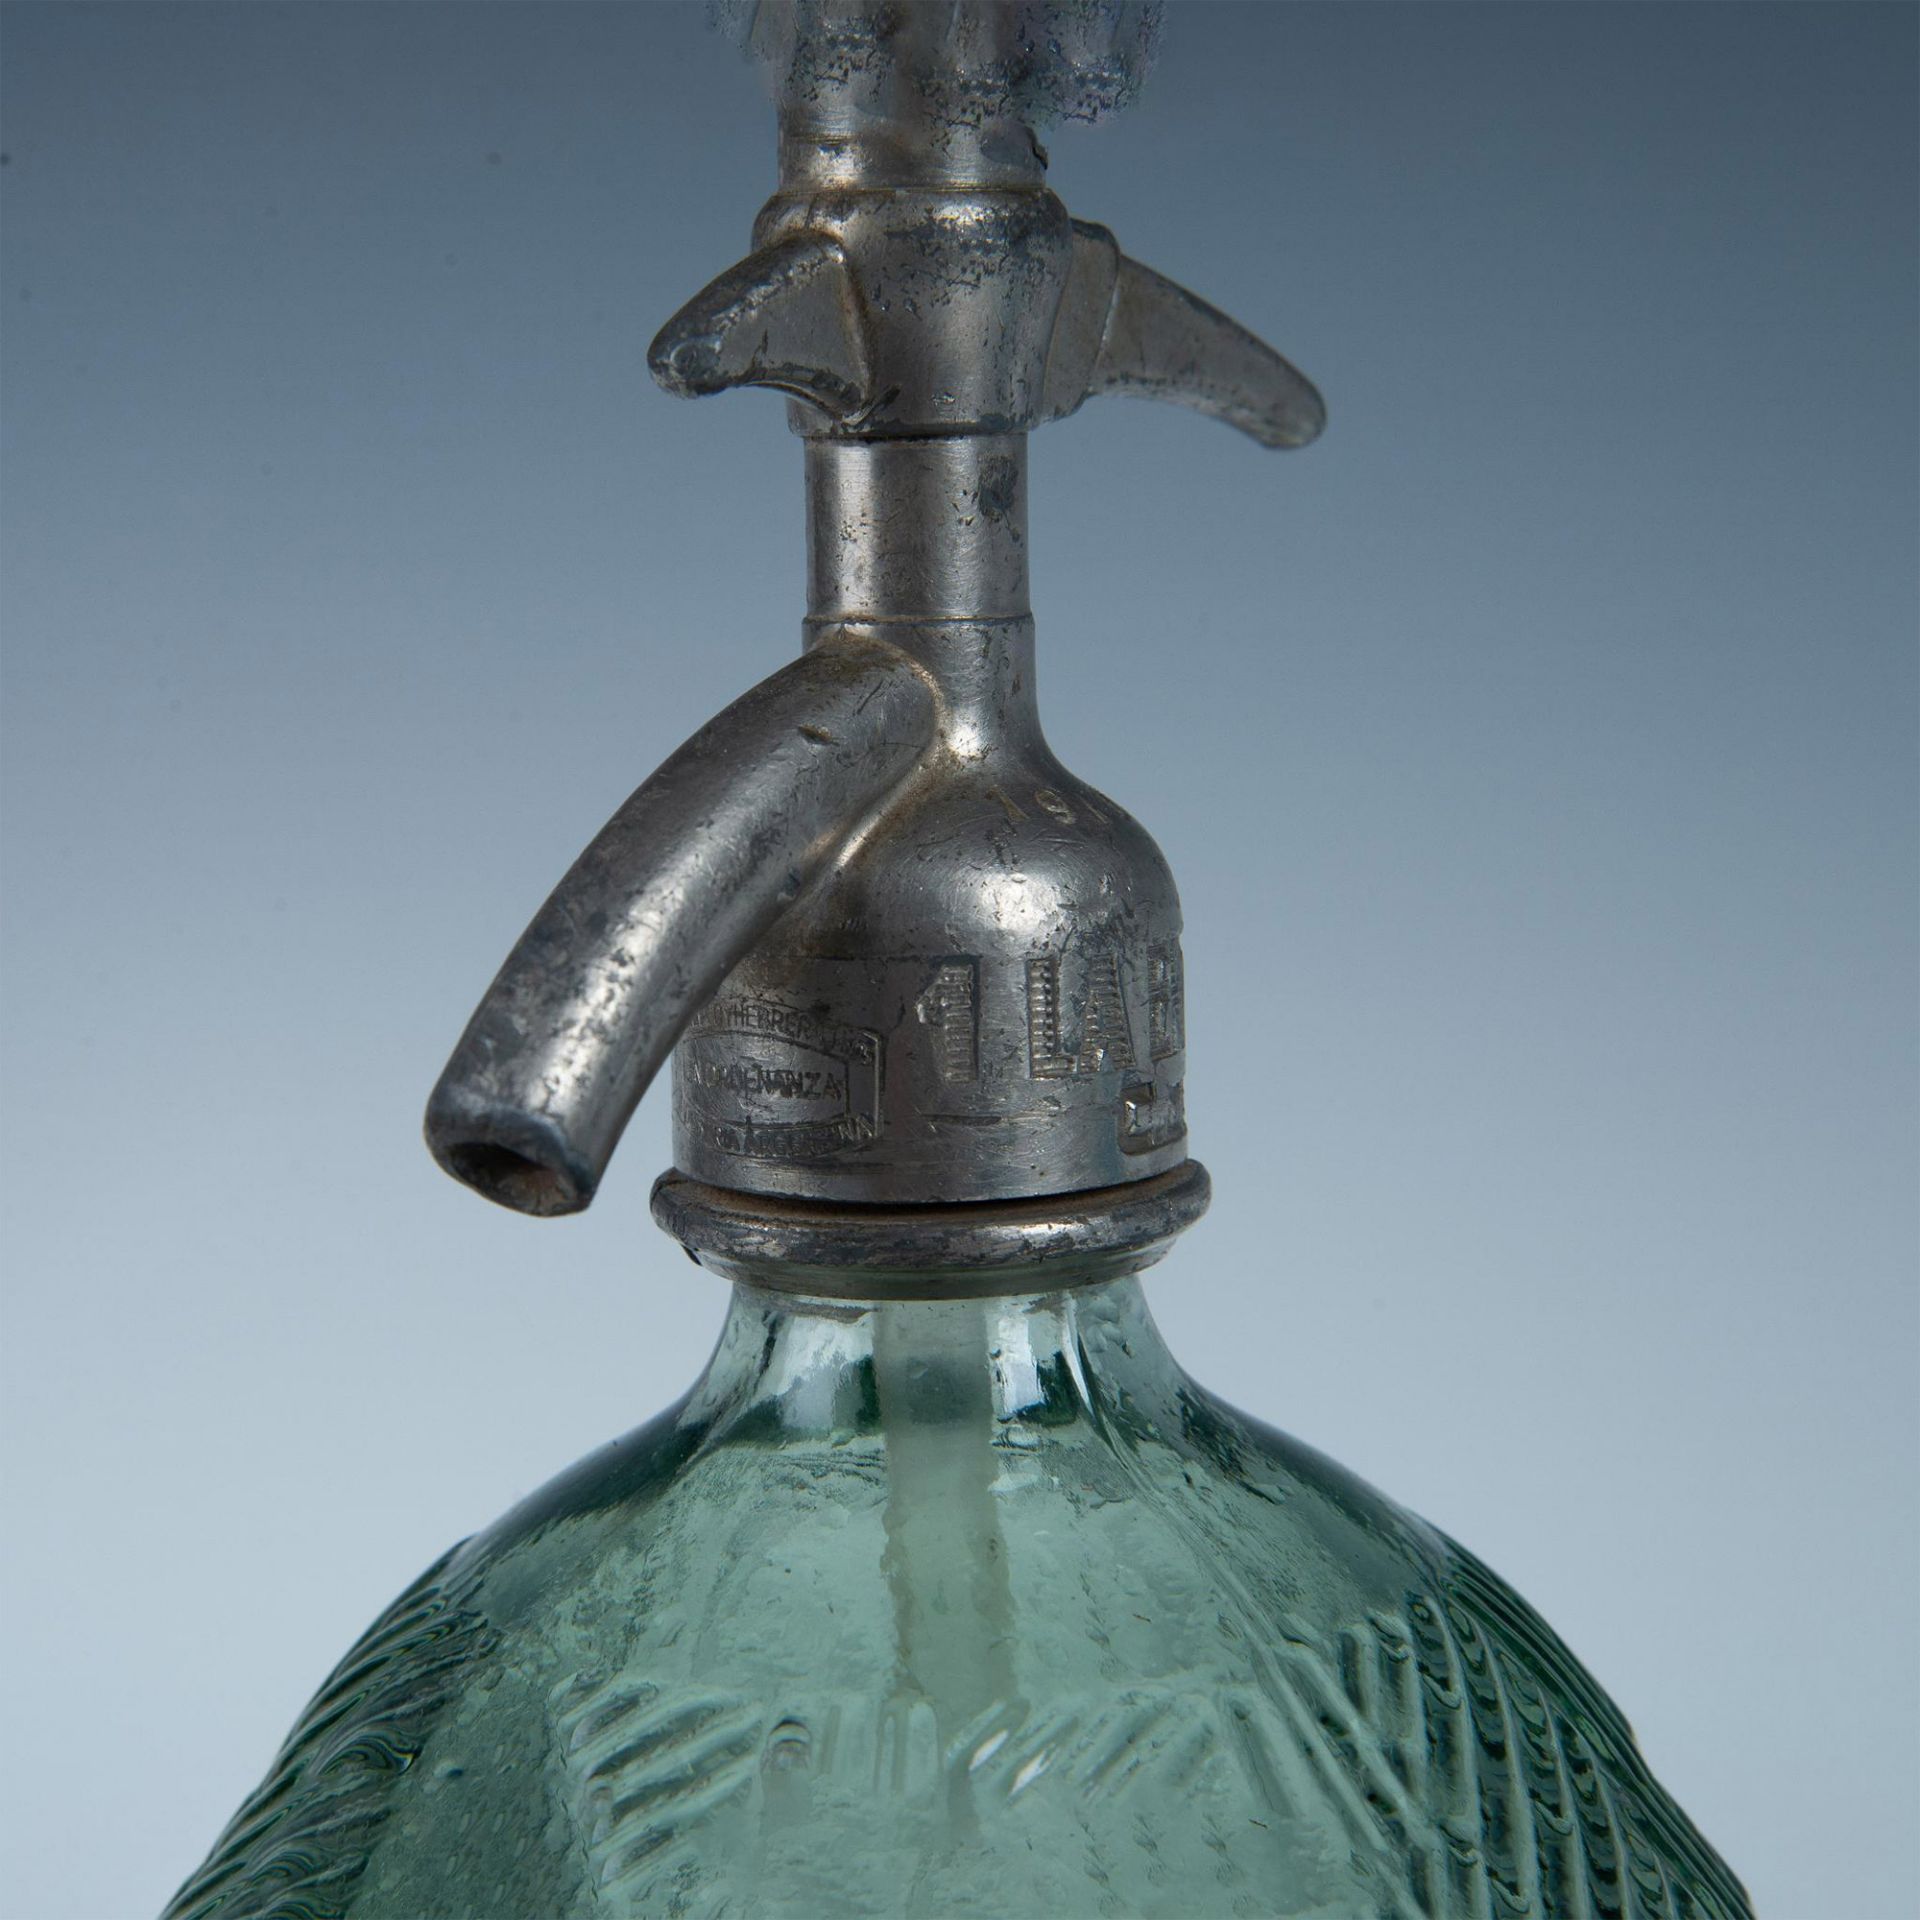 Antique Seltzer Bottle Gonzalez Hnos, Argentina - Image 5 of 7